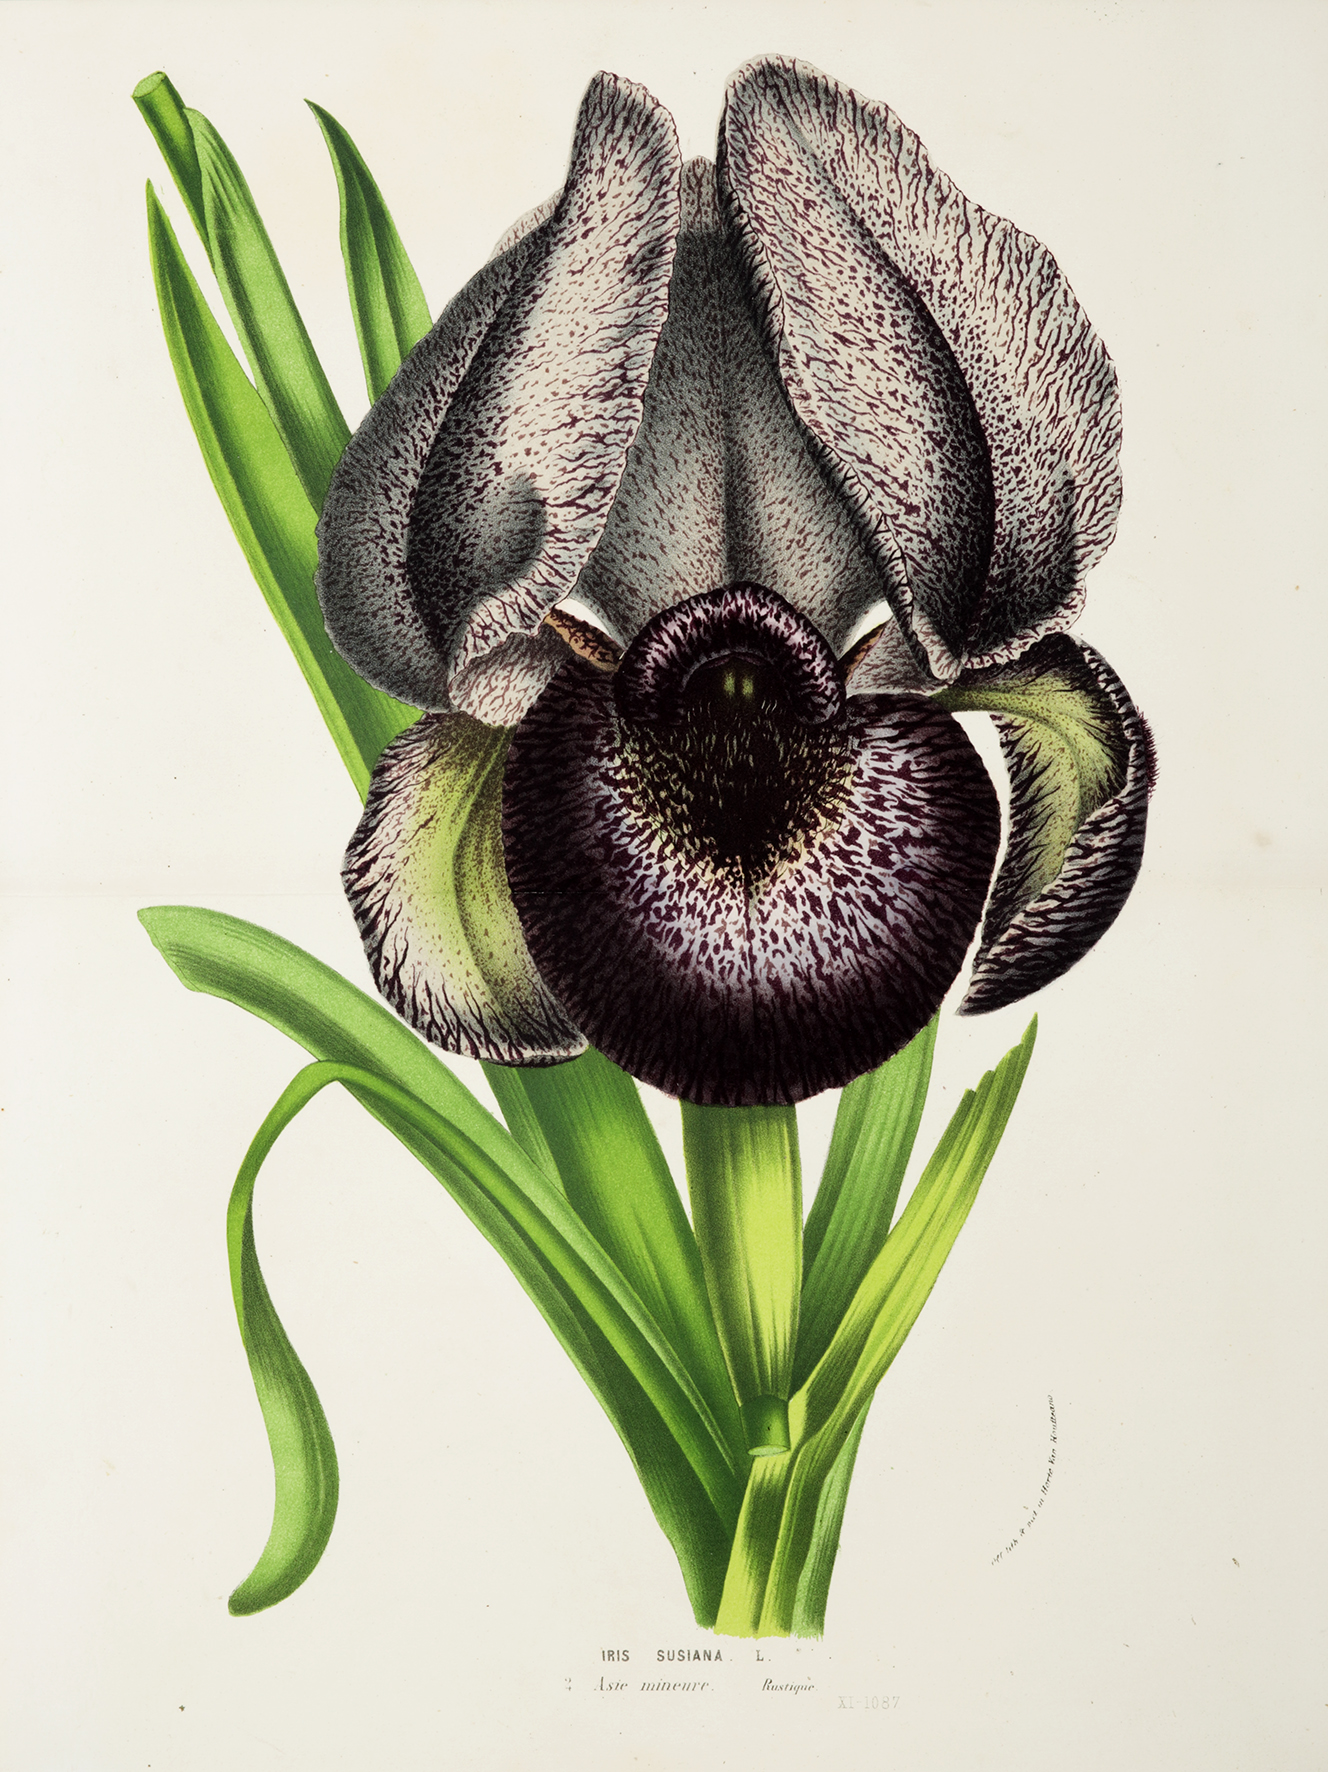 Iris Susiana. L. - Antique Print from 1883